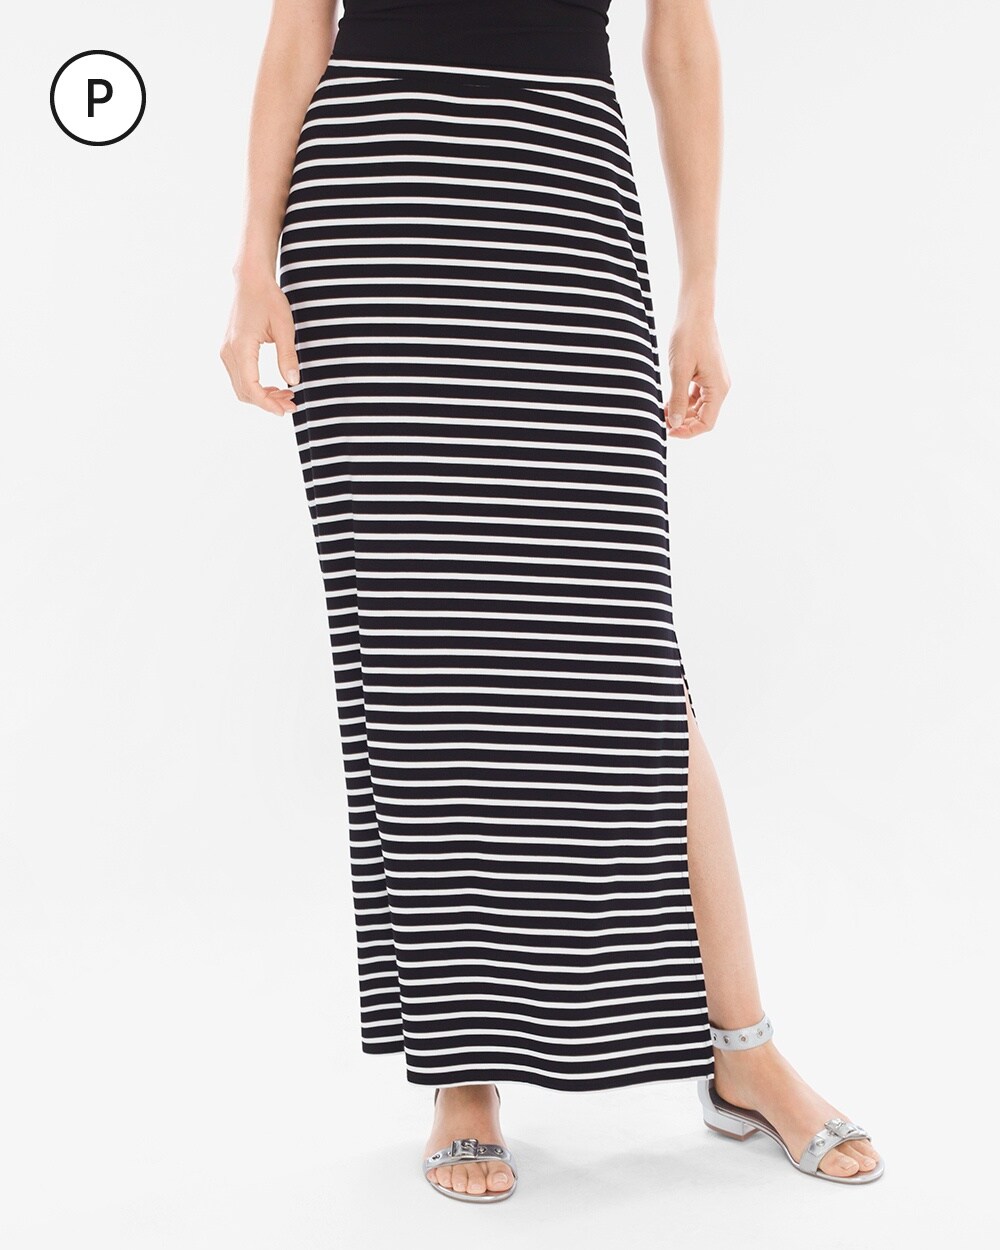 Petite Black and White Striped Maxi Skirt